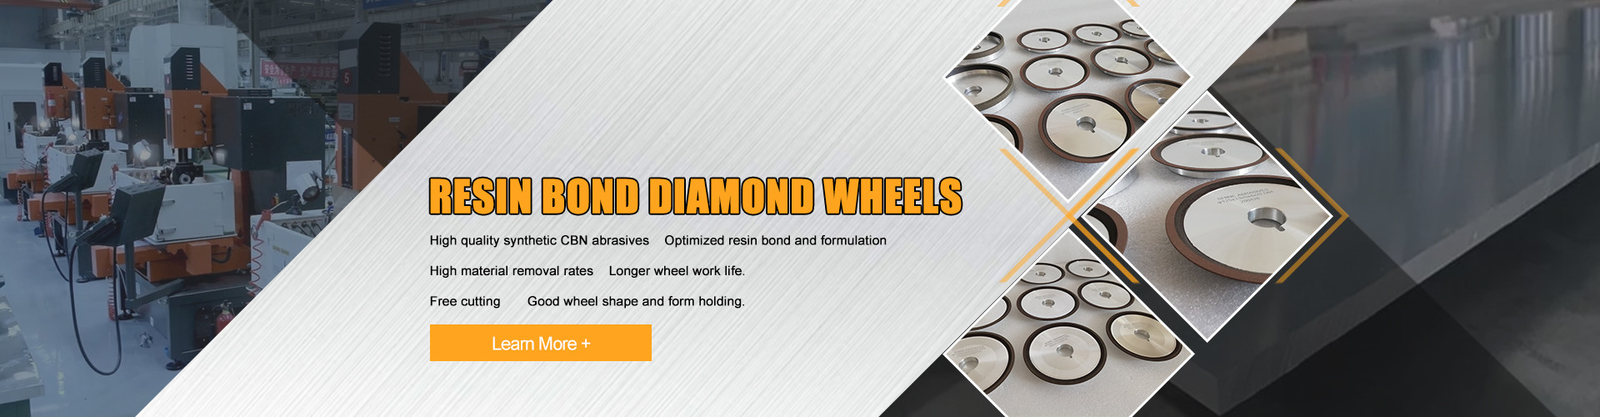 Harsband Diamond Wheels